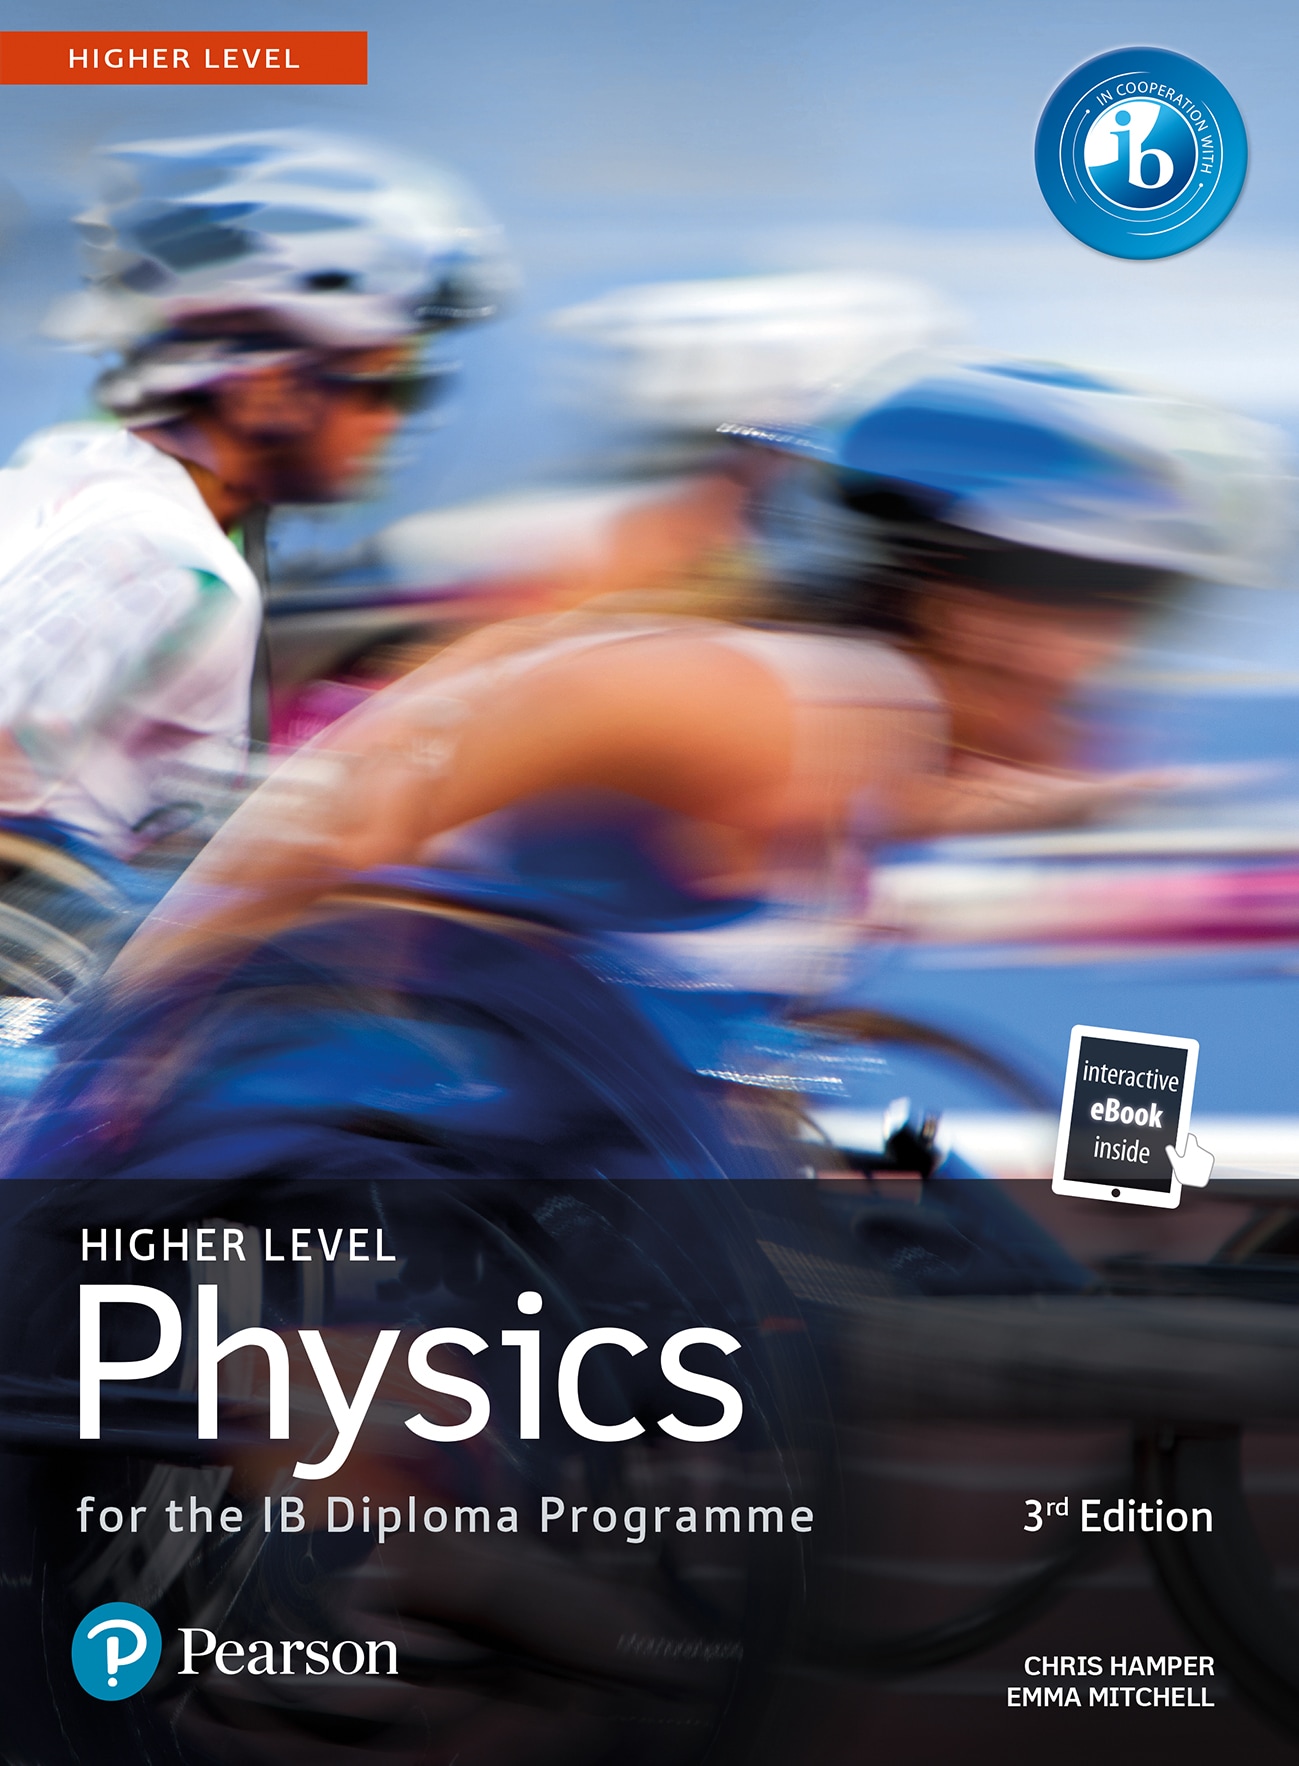 IB DP Physics HIgher Level student book